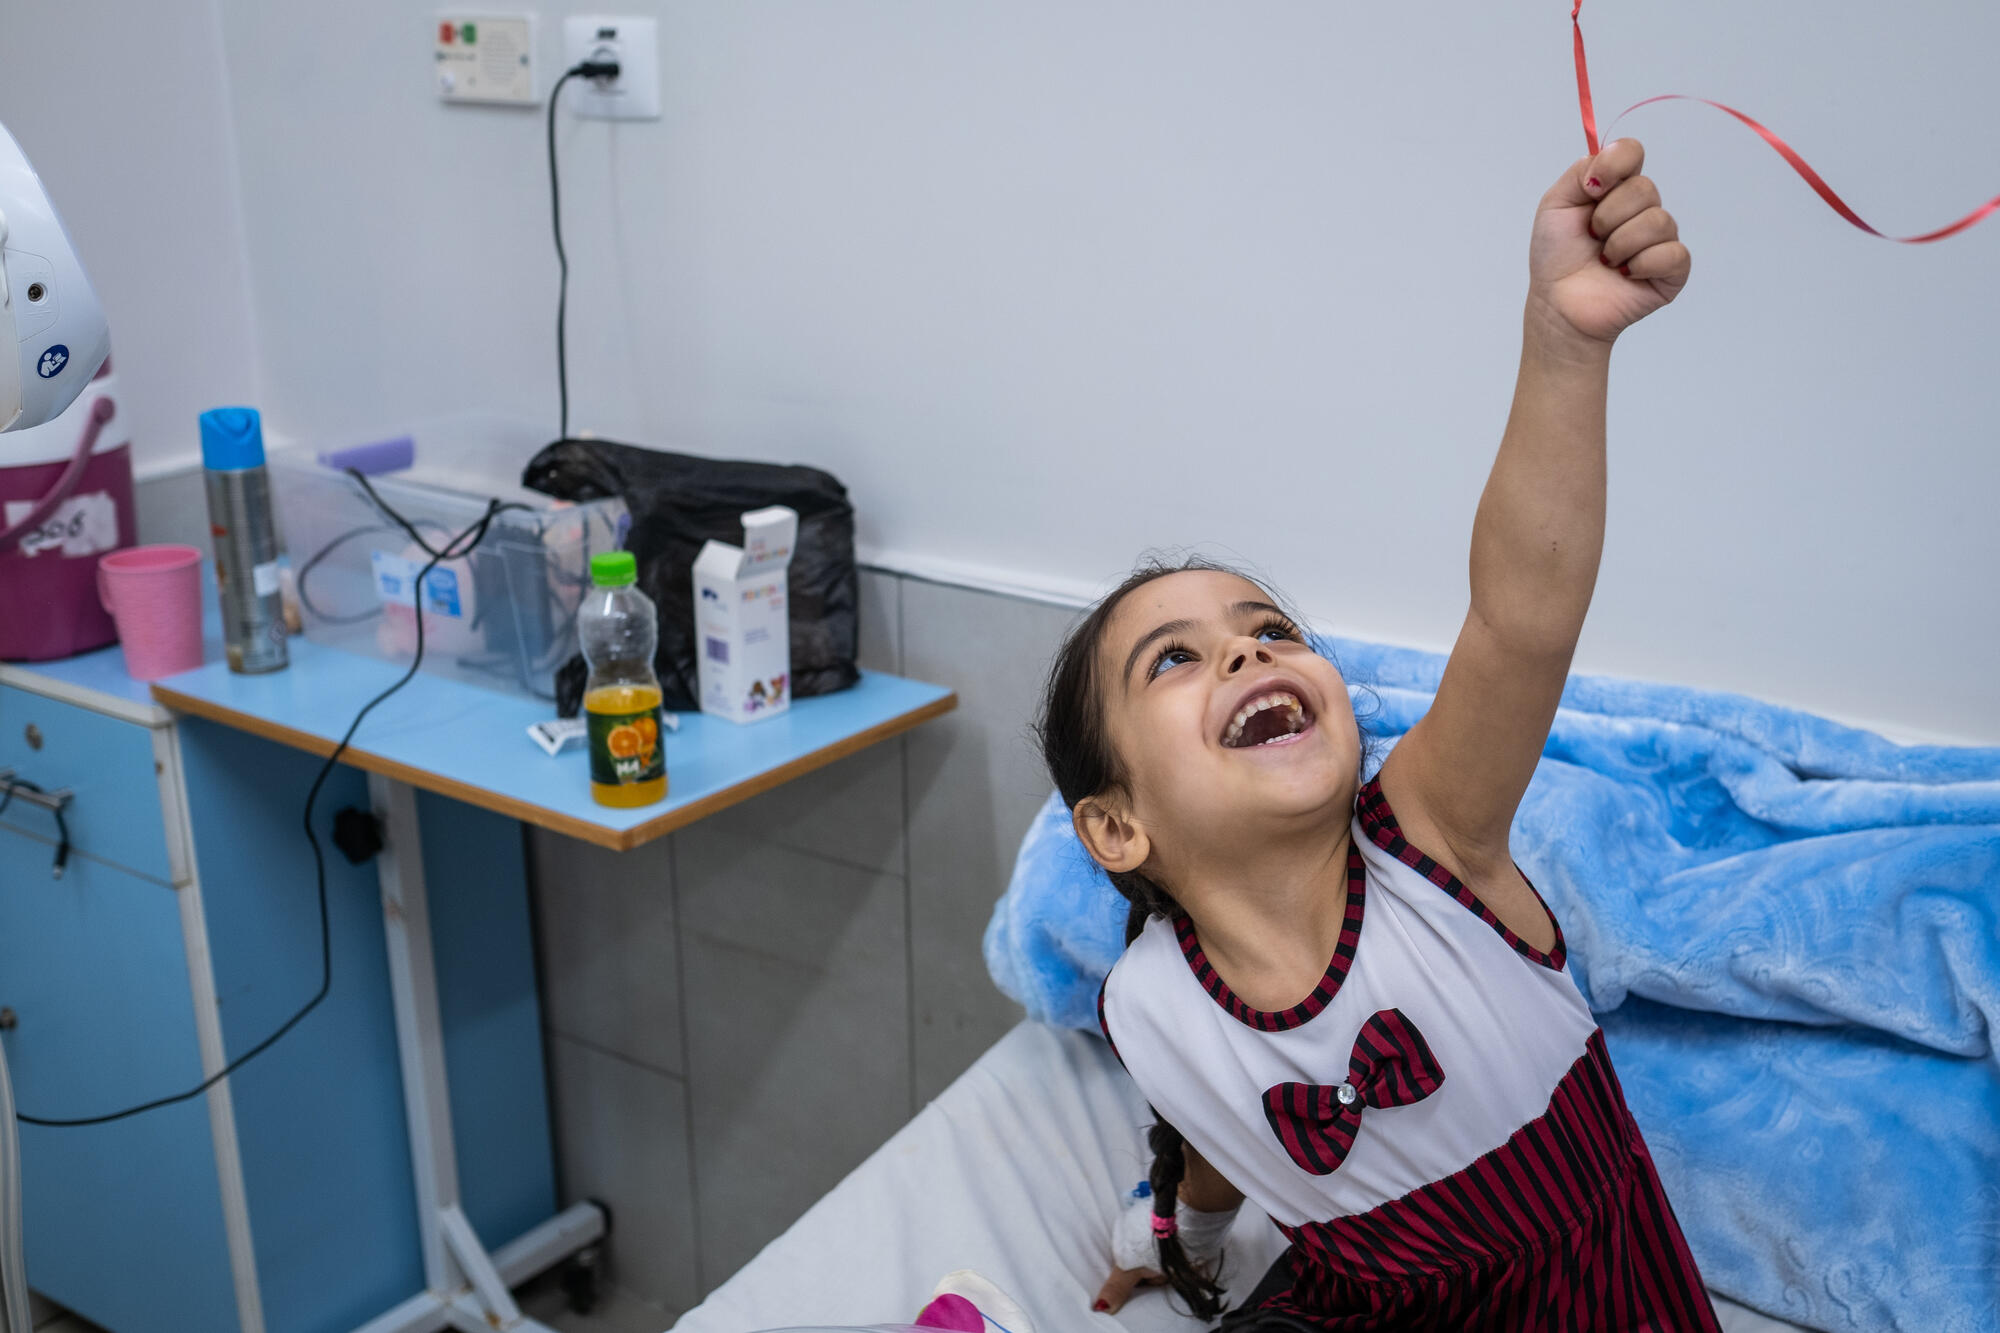 Palestine: Treating child injuries in blockaded Gaza 